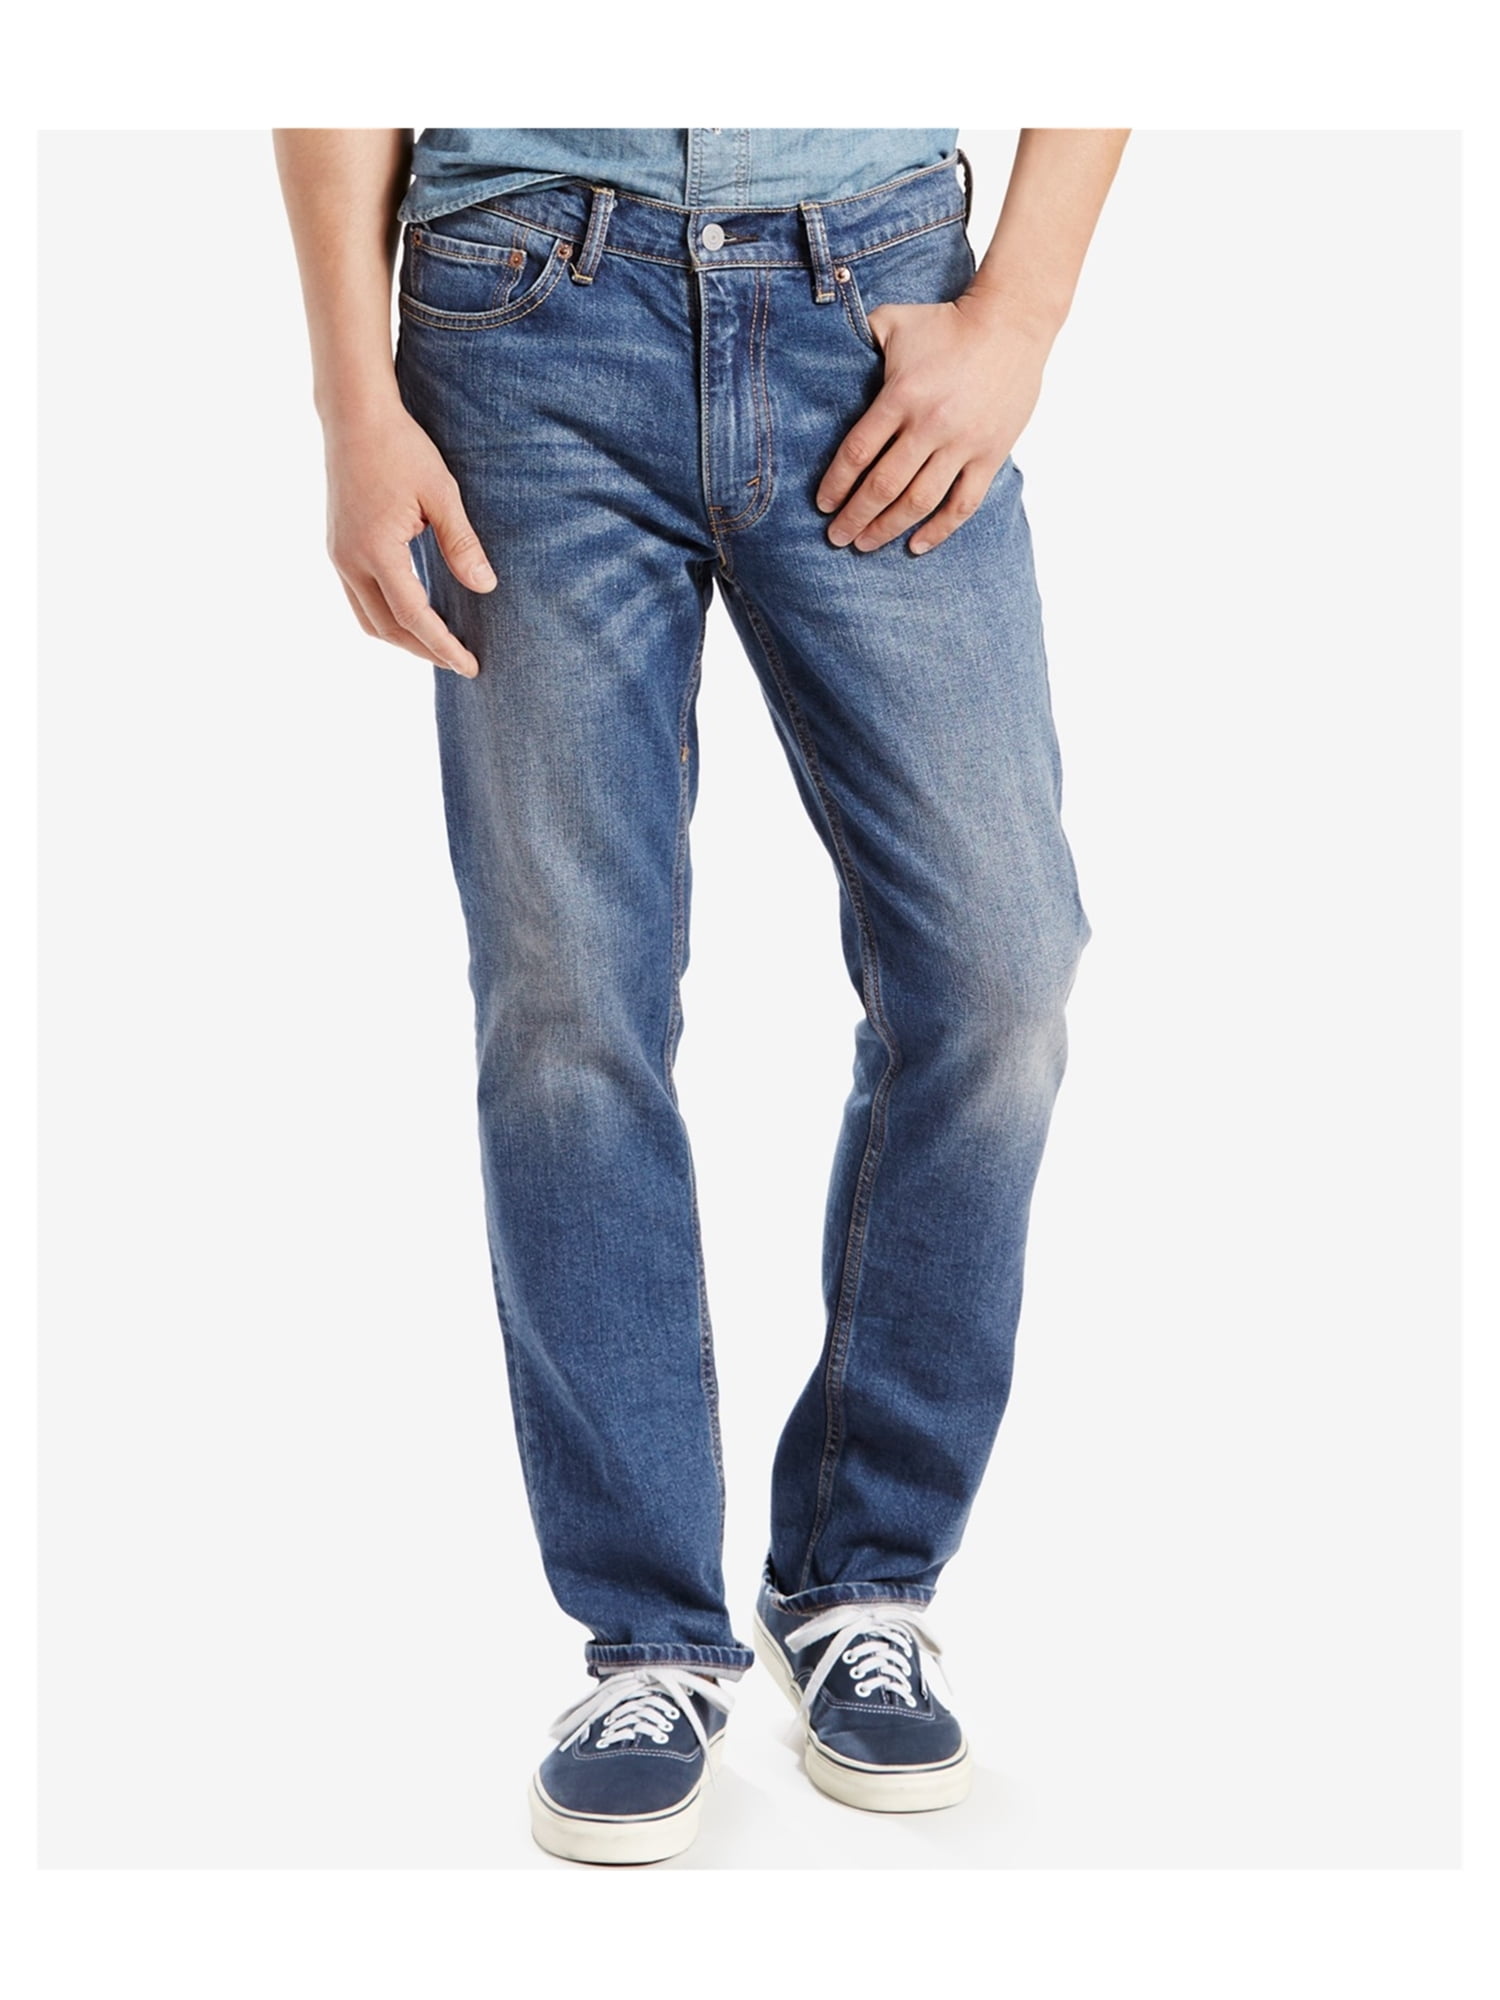 mens levi's 541 stretch jeans